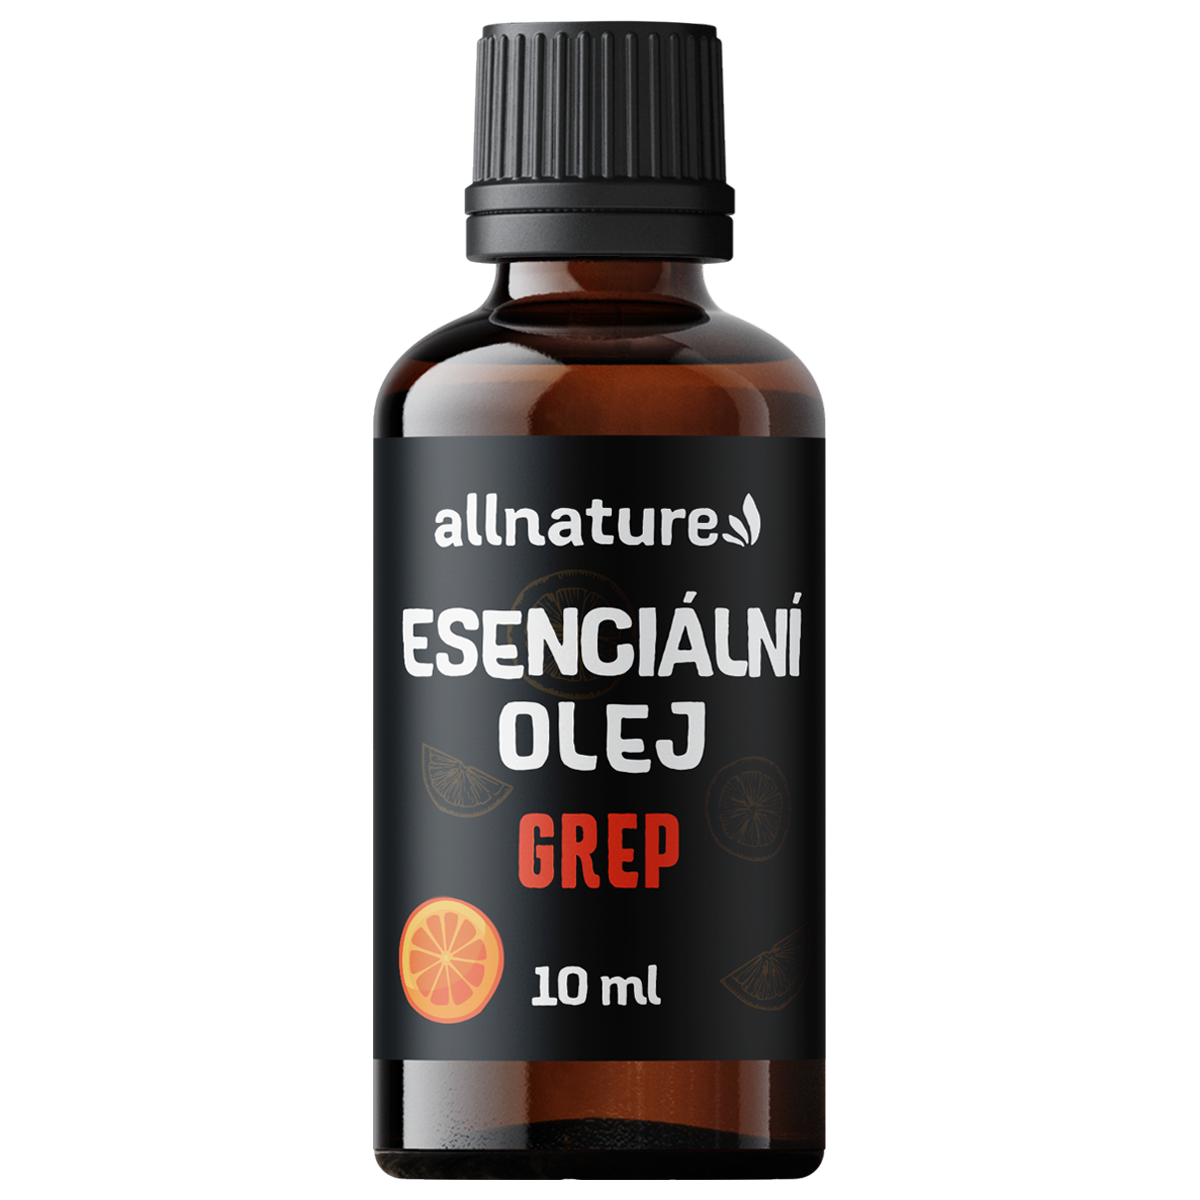 Allnature Esenciální olej Grep (10 ml) - snižuje napětí a detoxikuje Allnature